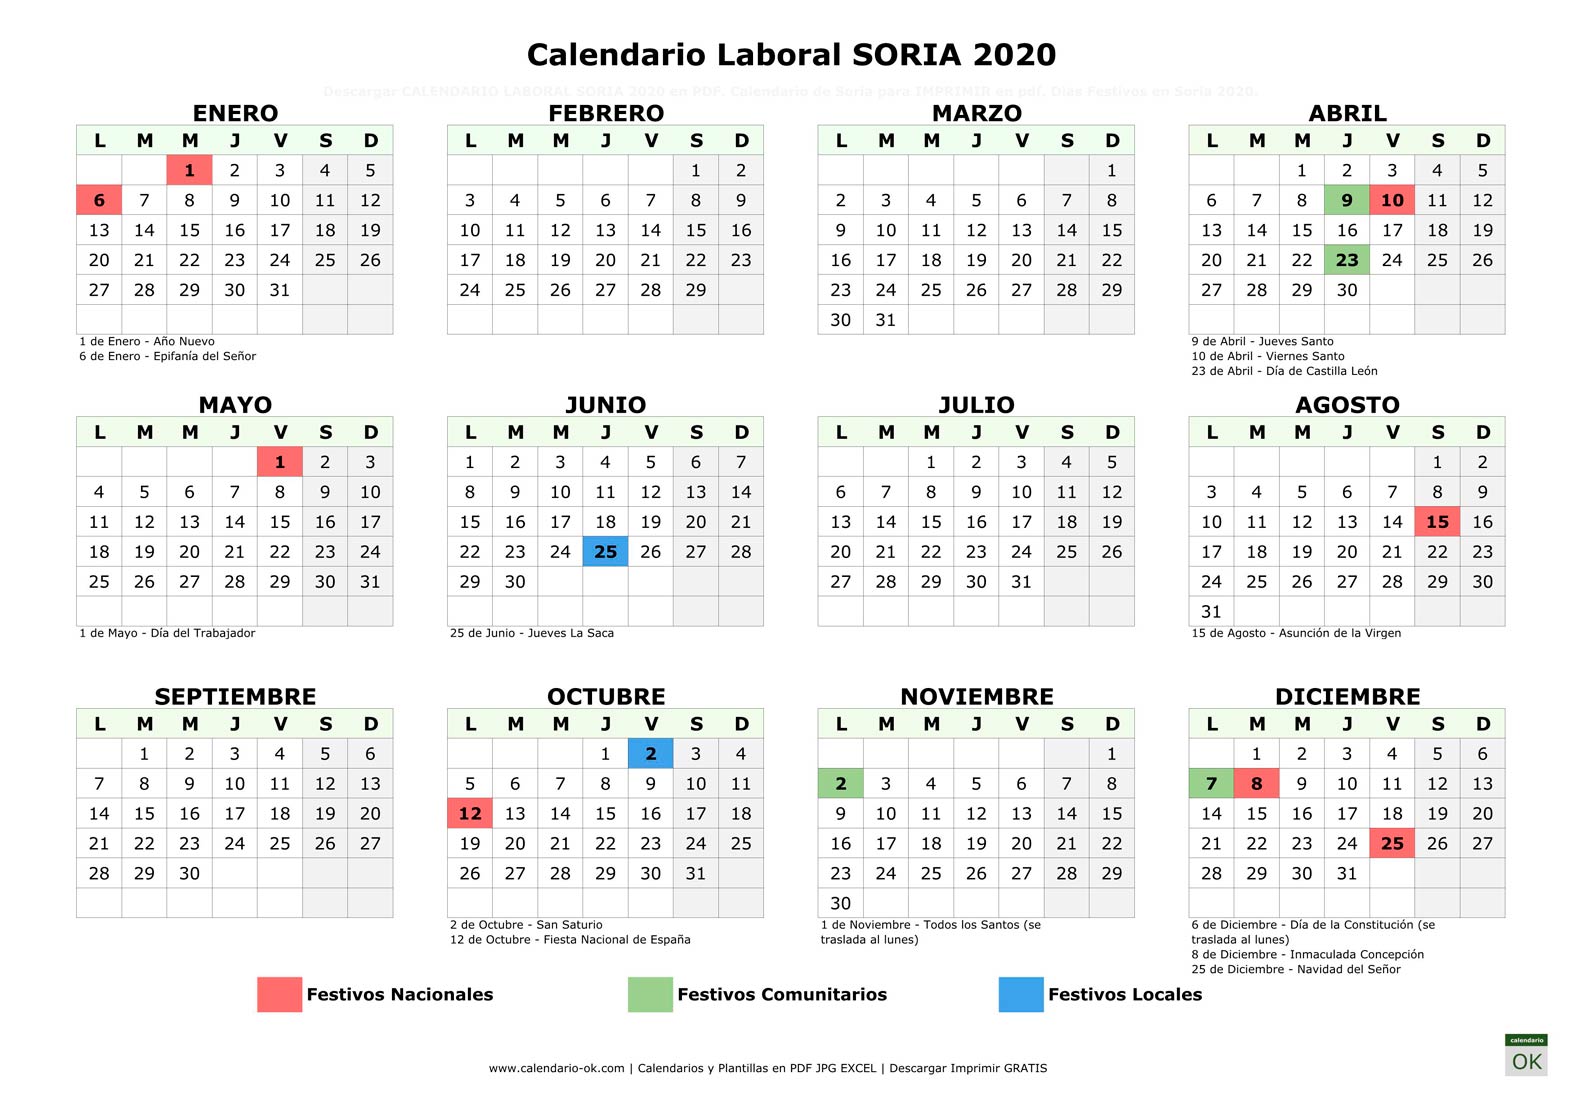 Calendario Laboral SORIA 2020 horizontal